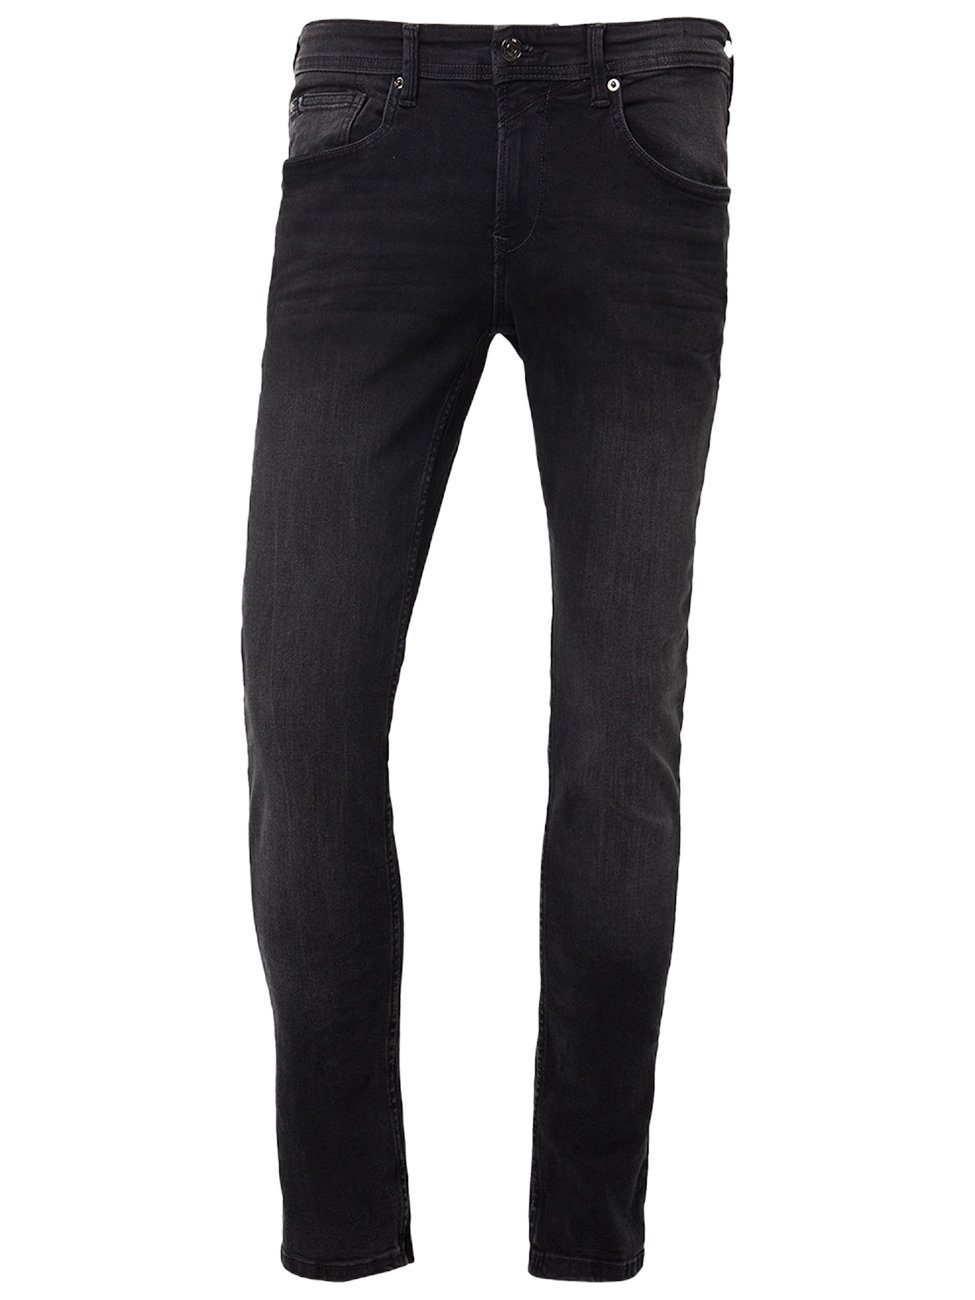 Schwarze Herren Skinny-Jeans online kaufen | OTTO